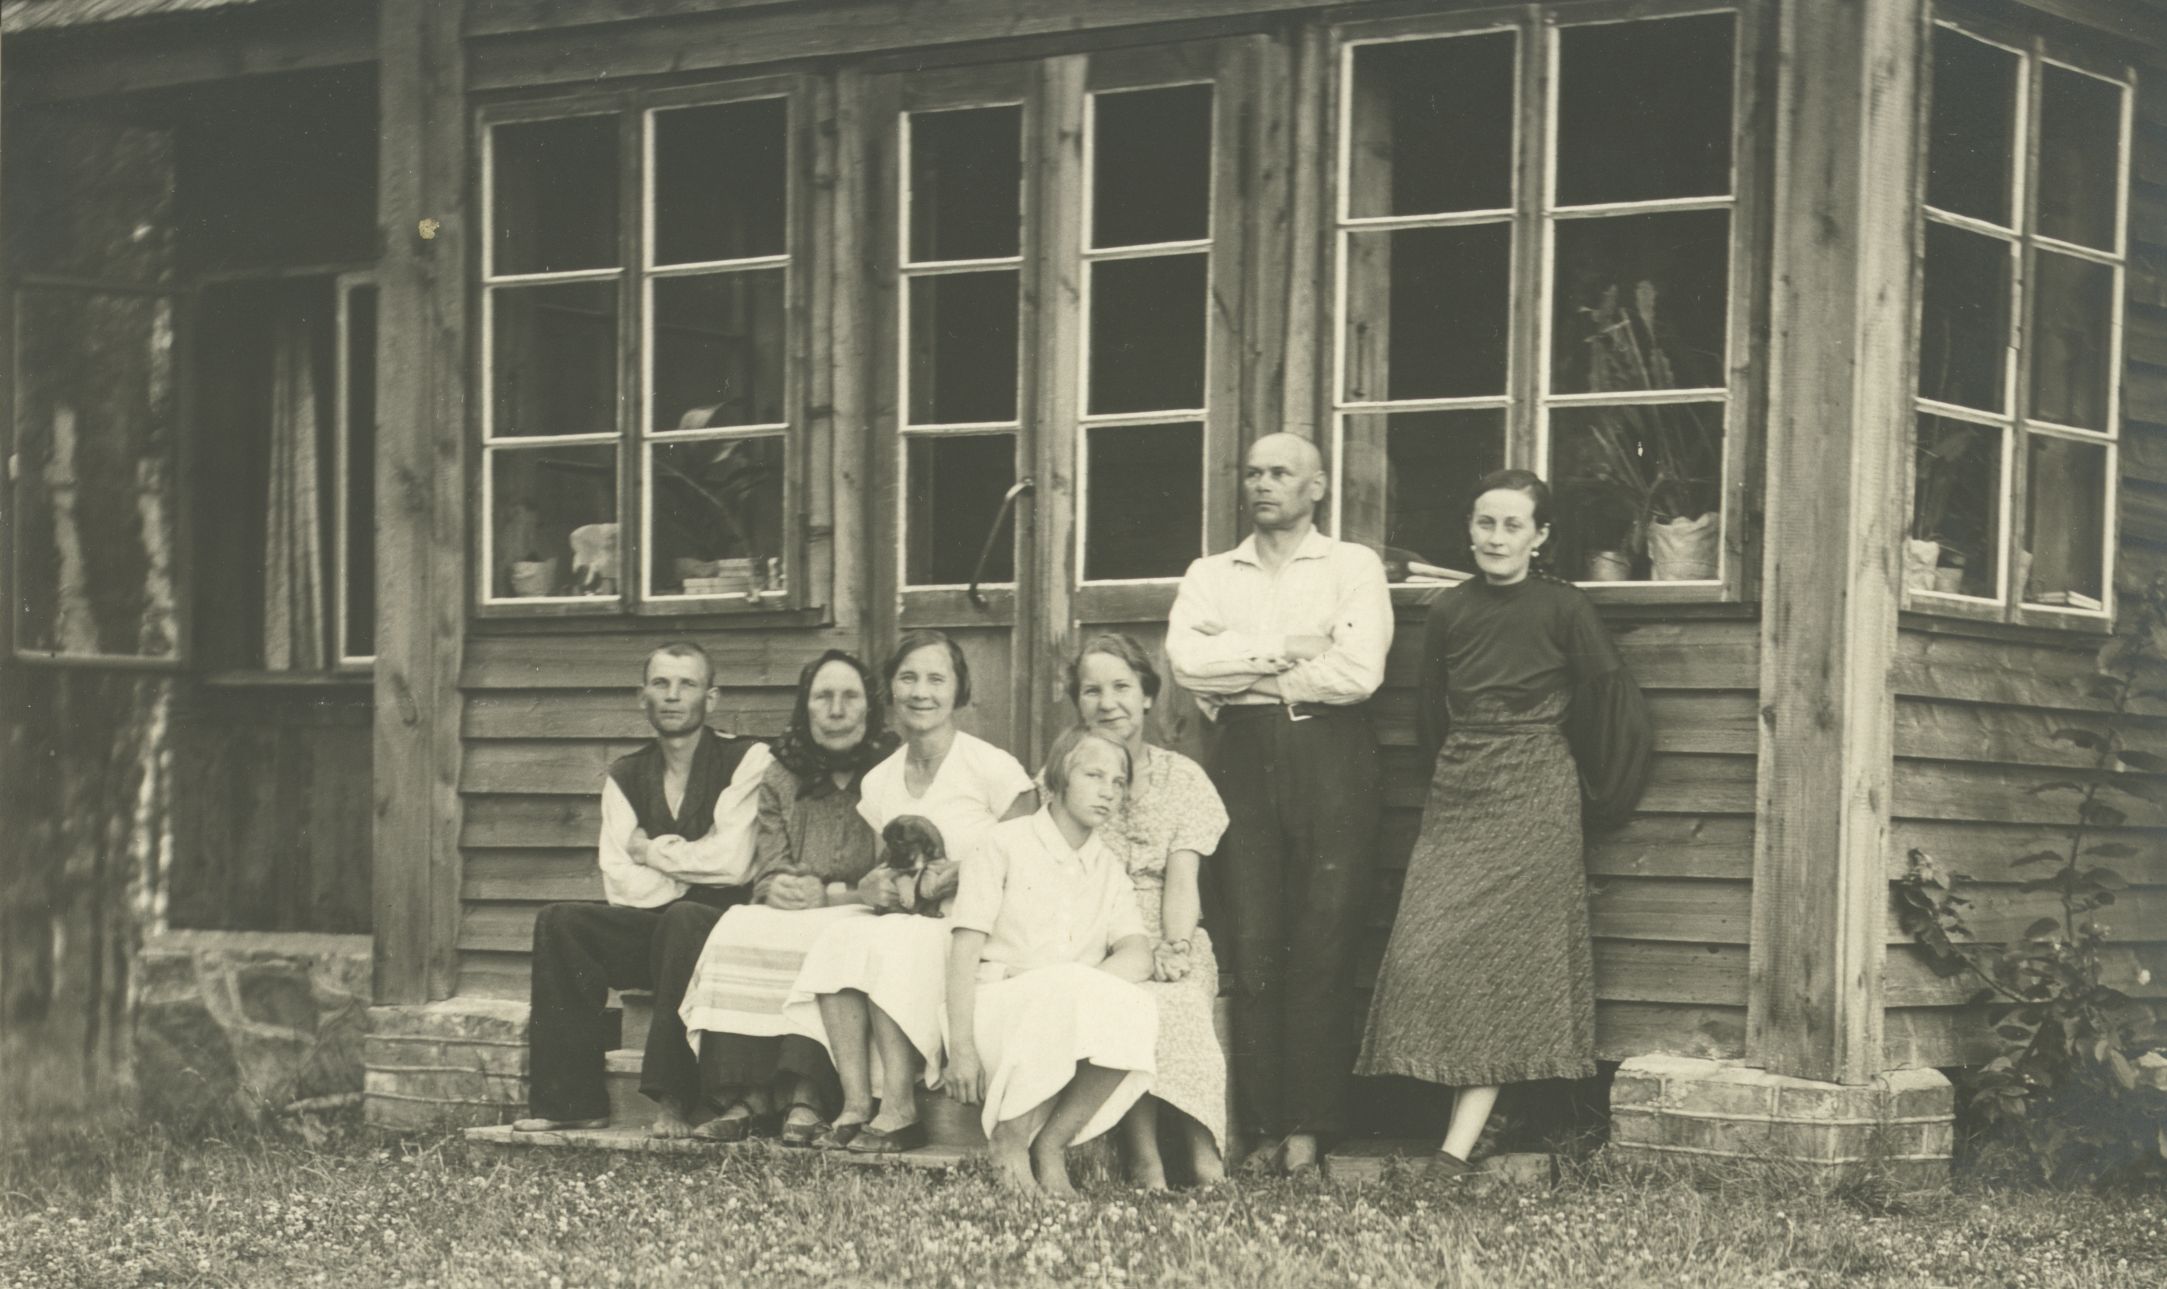 Henrik and Hilda Visnapuud group photographer Luunja Sirgul in the summer of 1934